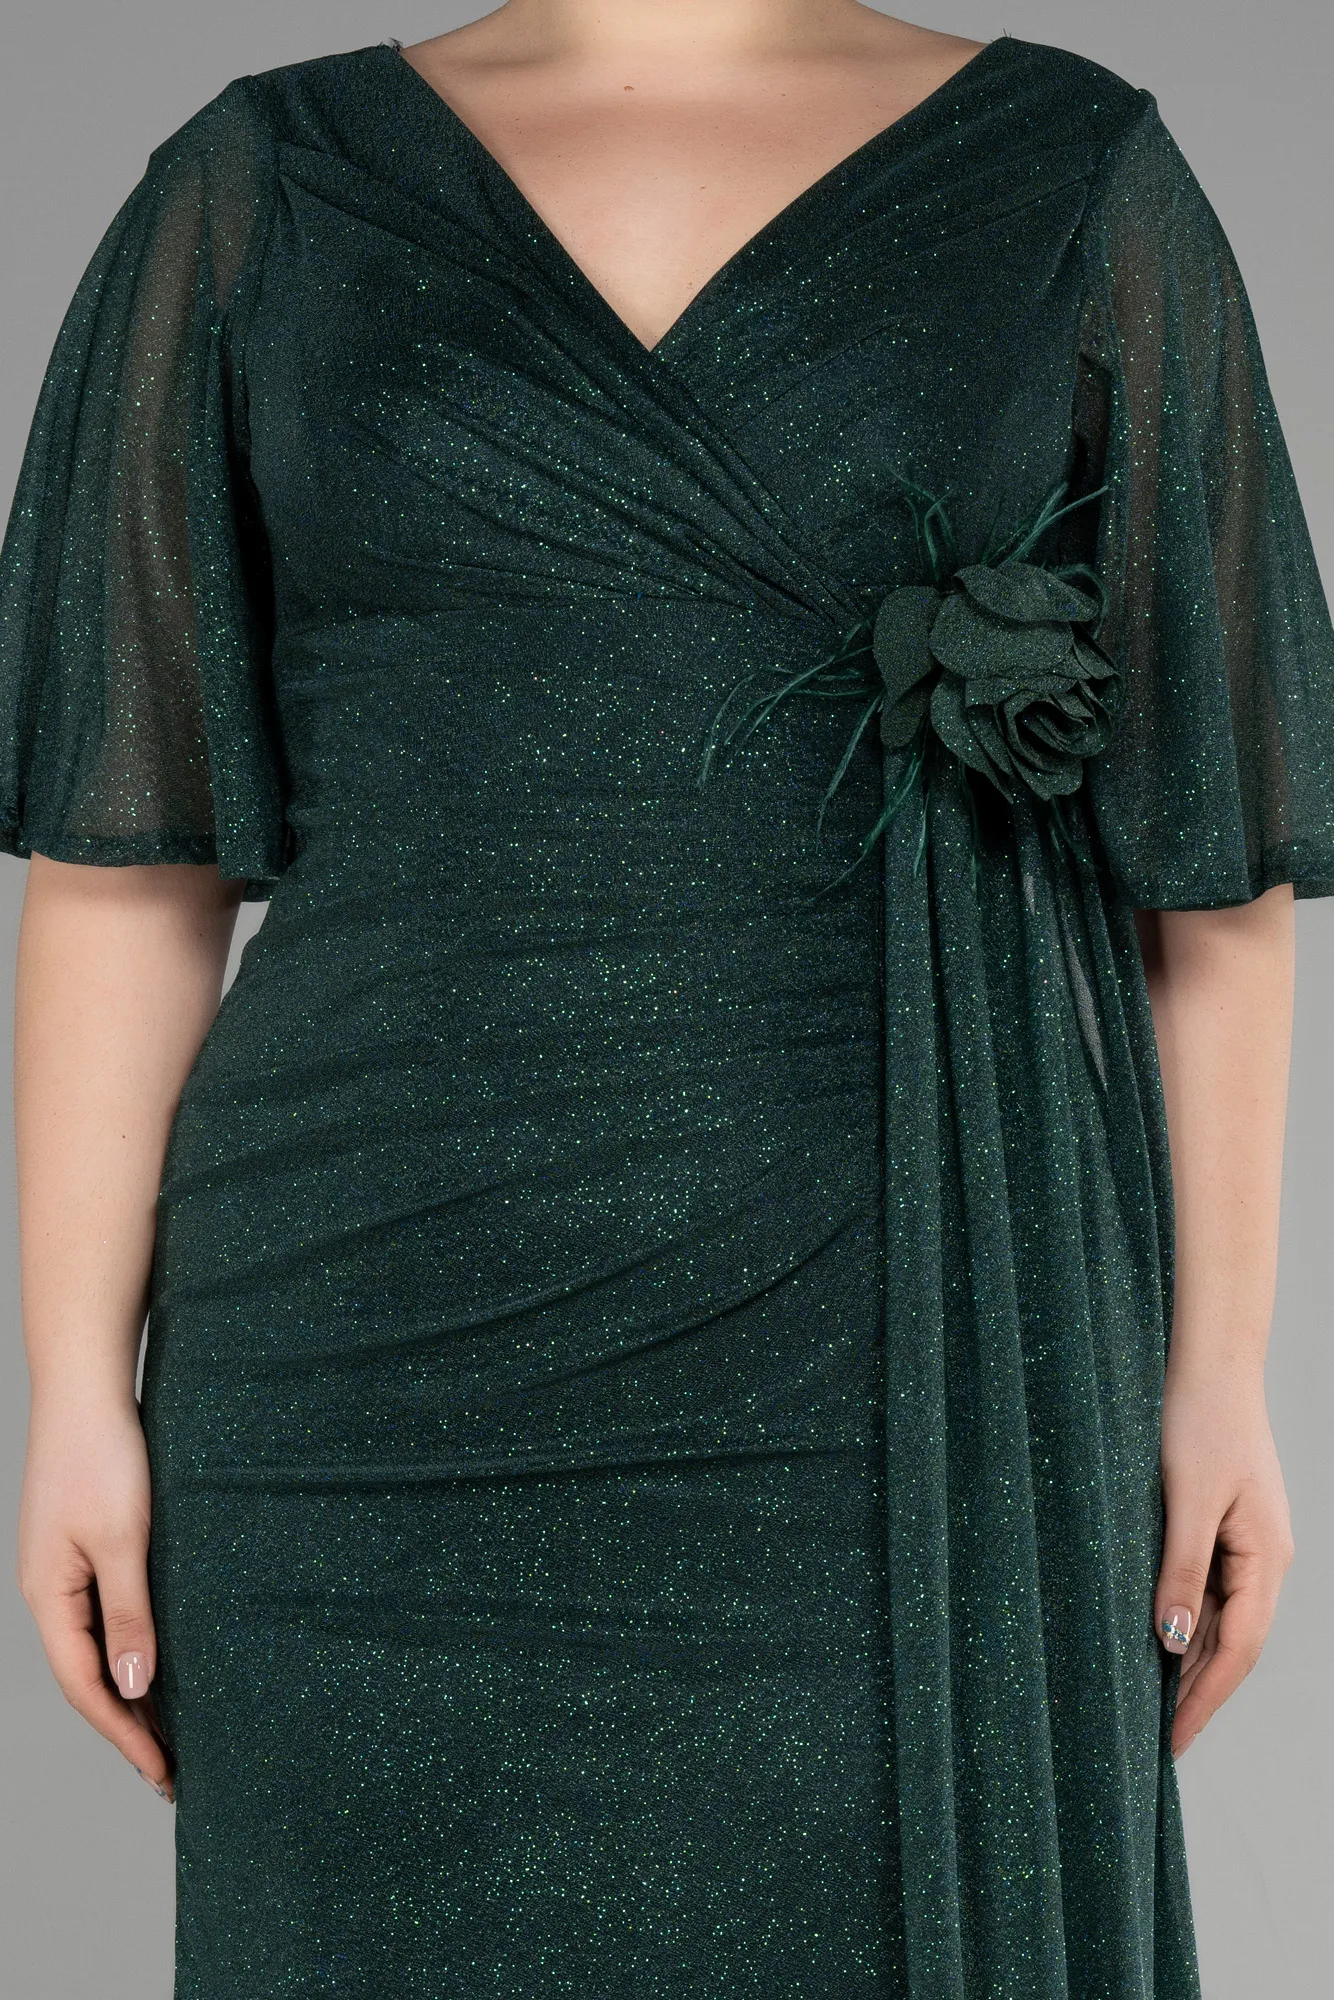 Emerald Green-Long Plus Size Evening Gown ABU3646